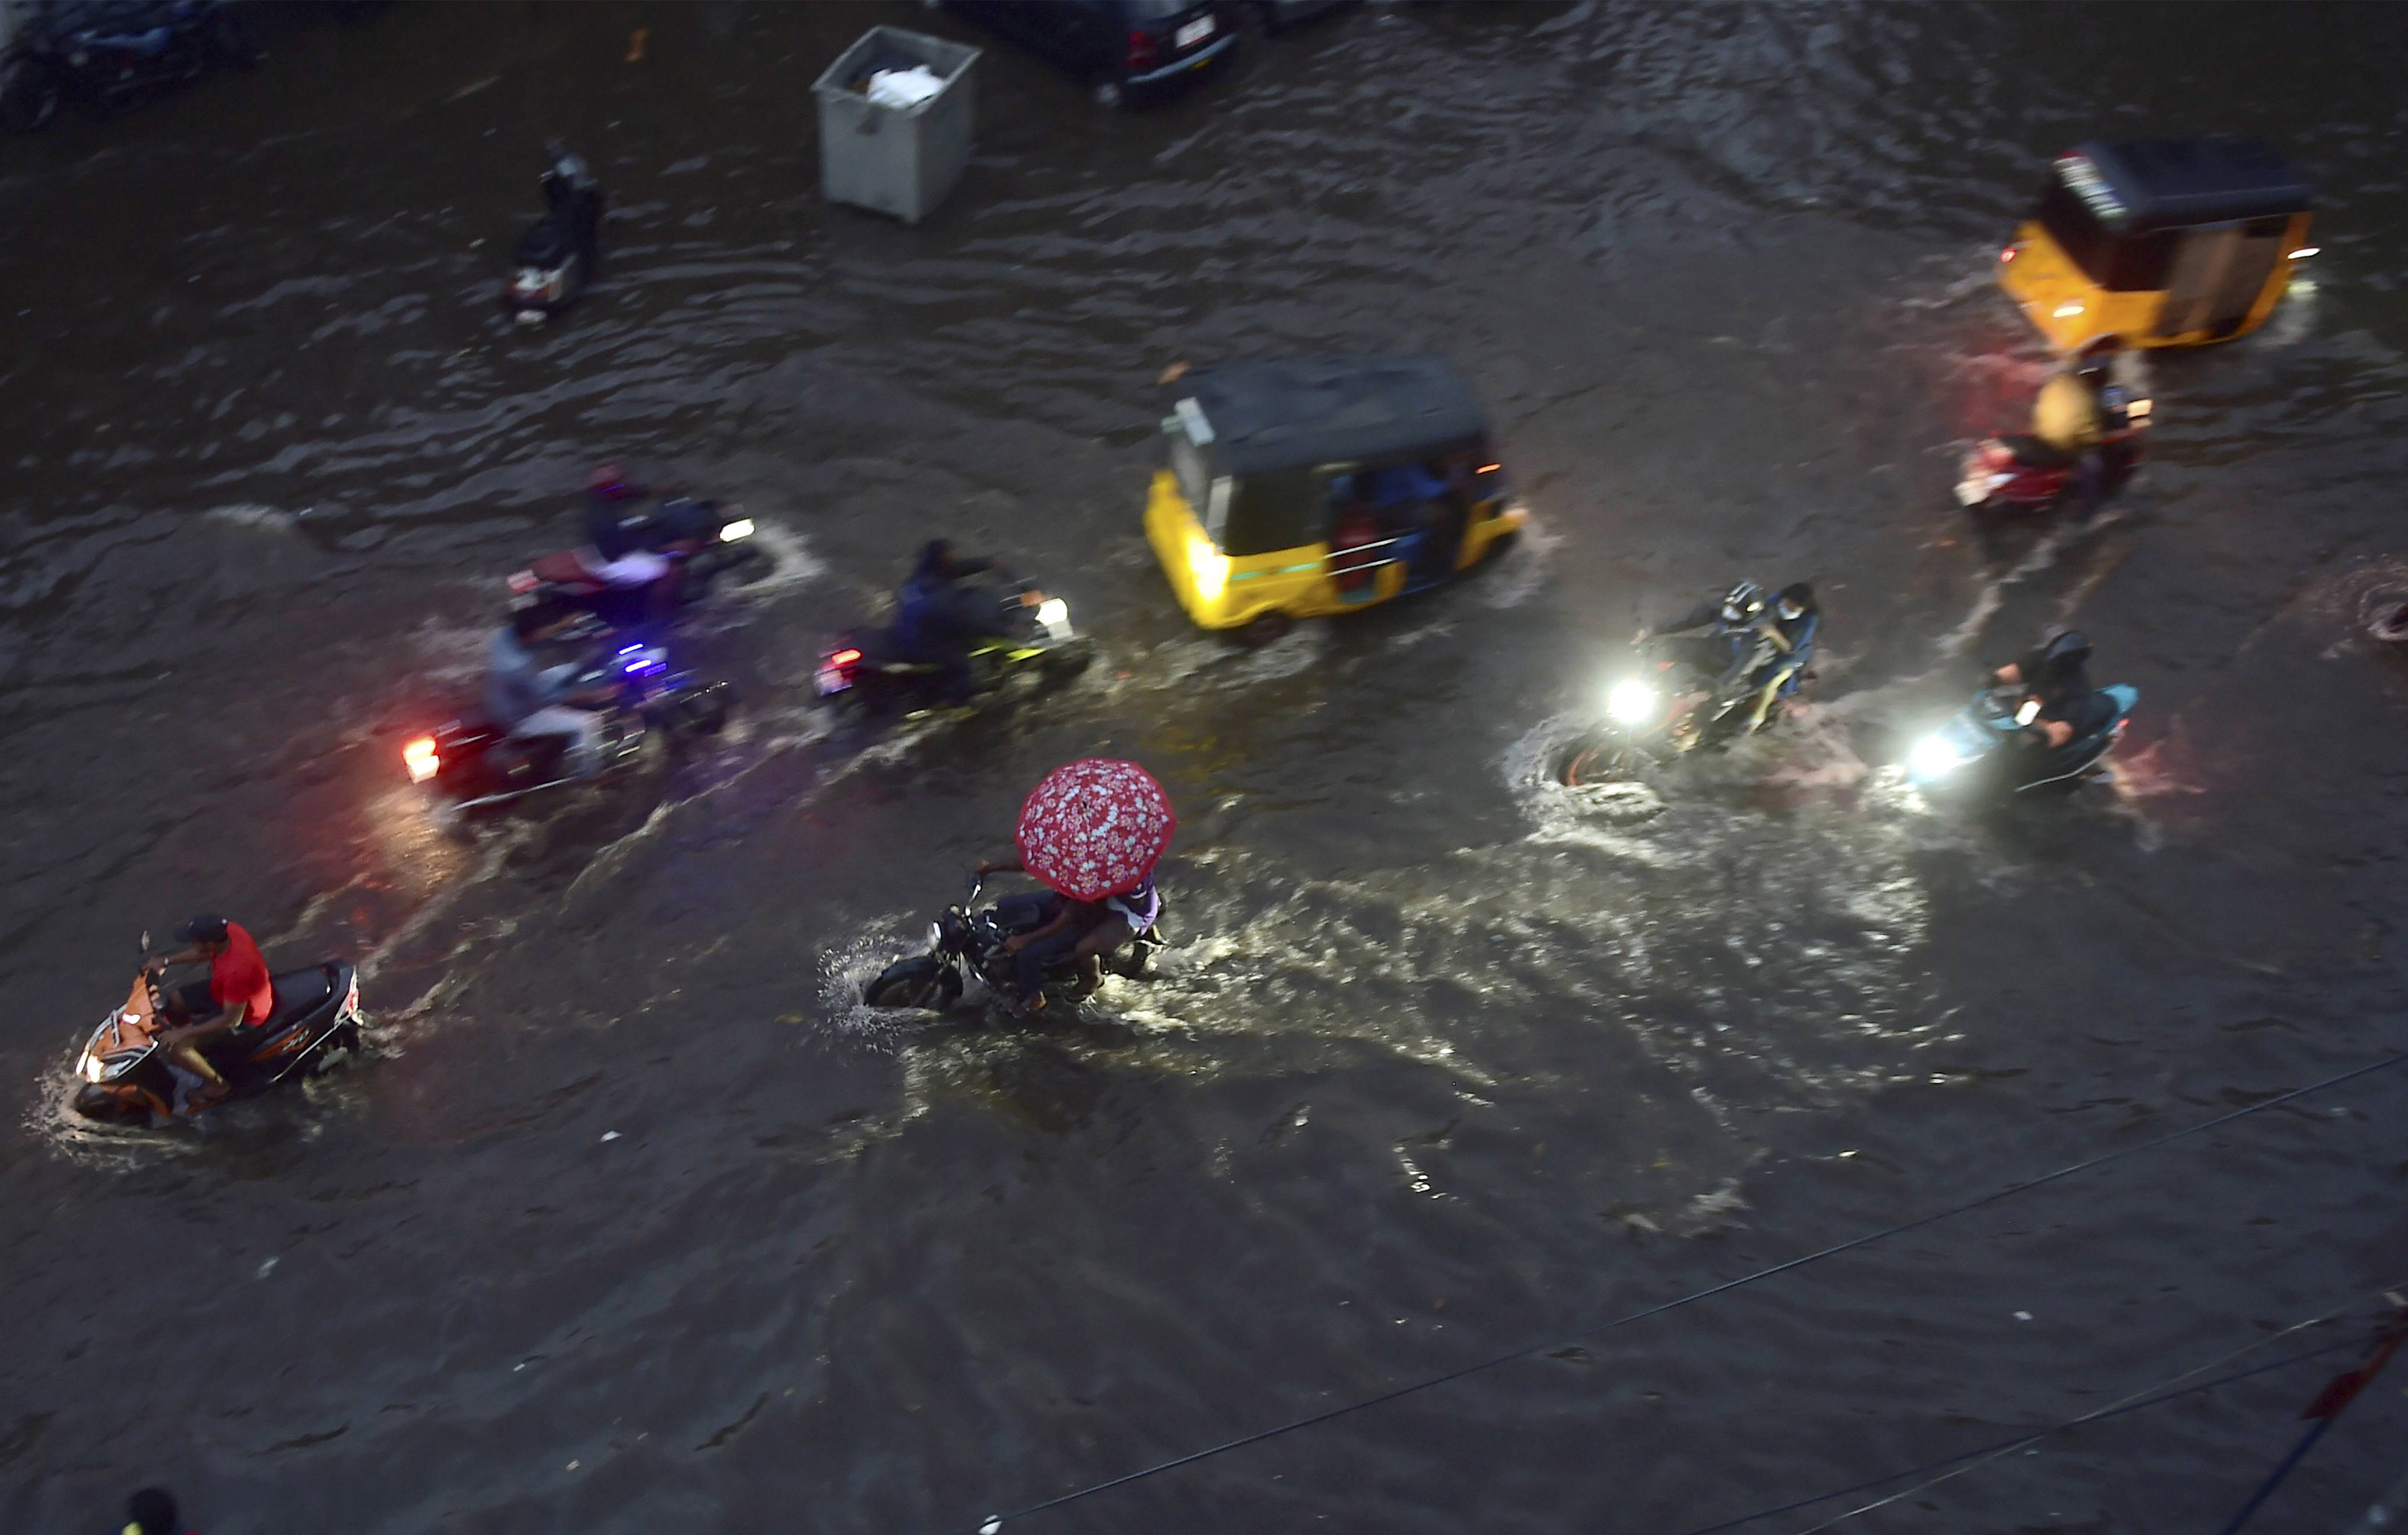   Chennai: Vehicles ply on a waterlogged road during heavy rain triggered by Cyclone Nivar, in Chennai, Tuesday, Nov. 24, 2020. Credit: PTI Photo